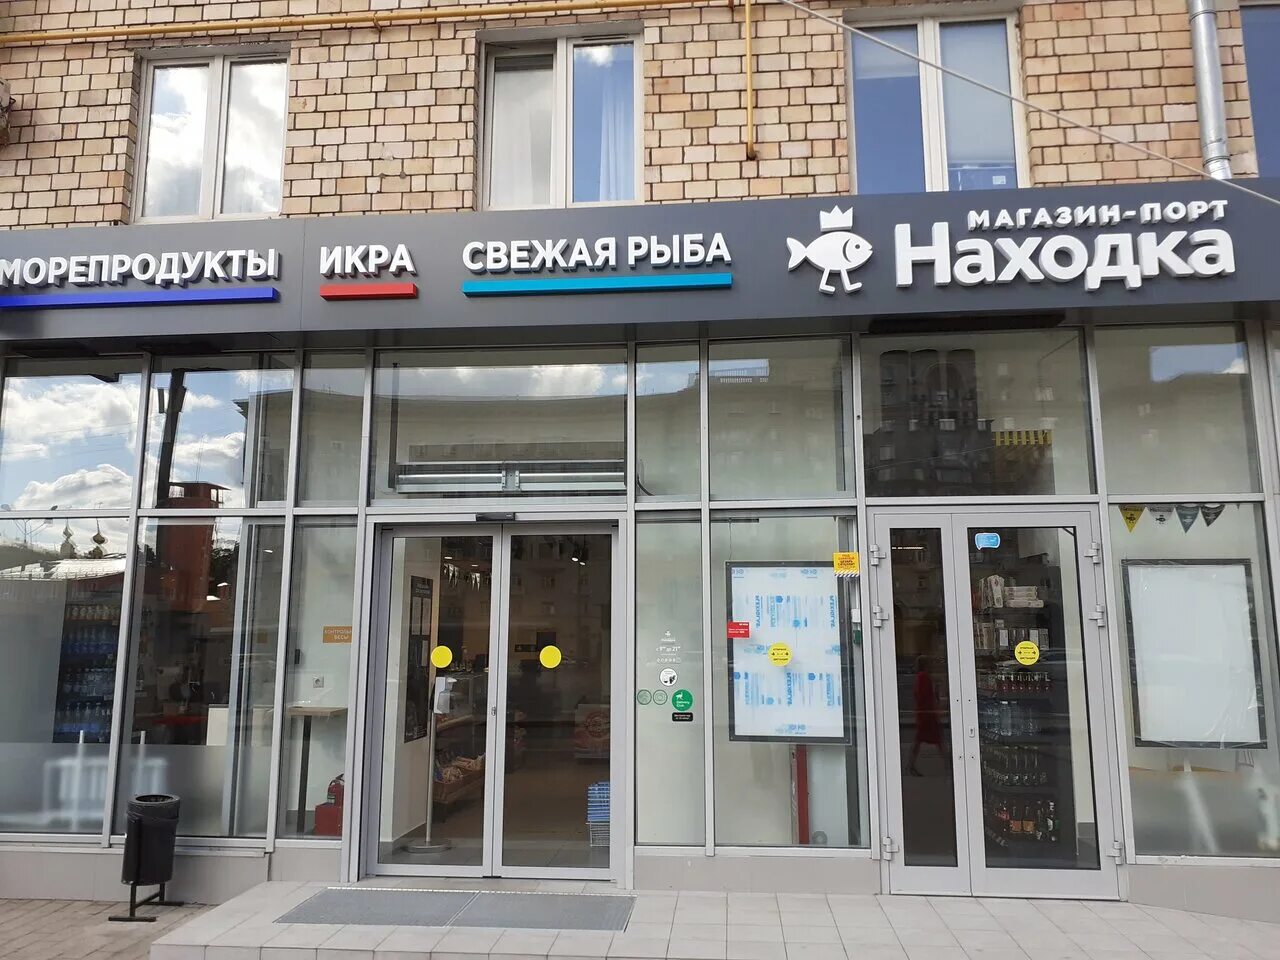 Телефон магазина находка. Магазин находка в Москве. Находка магазин рыбы. Находка магазин. Рыбный магазин находка в Москве.